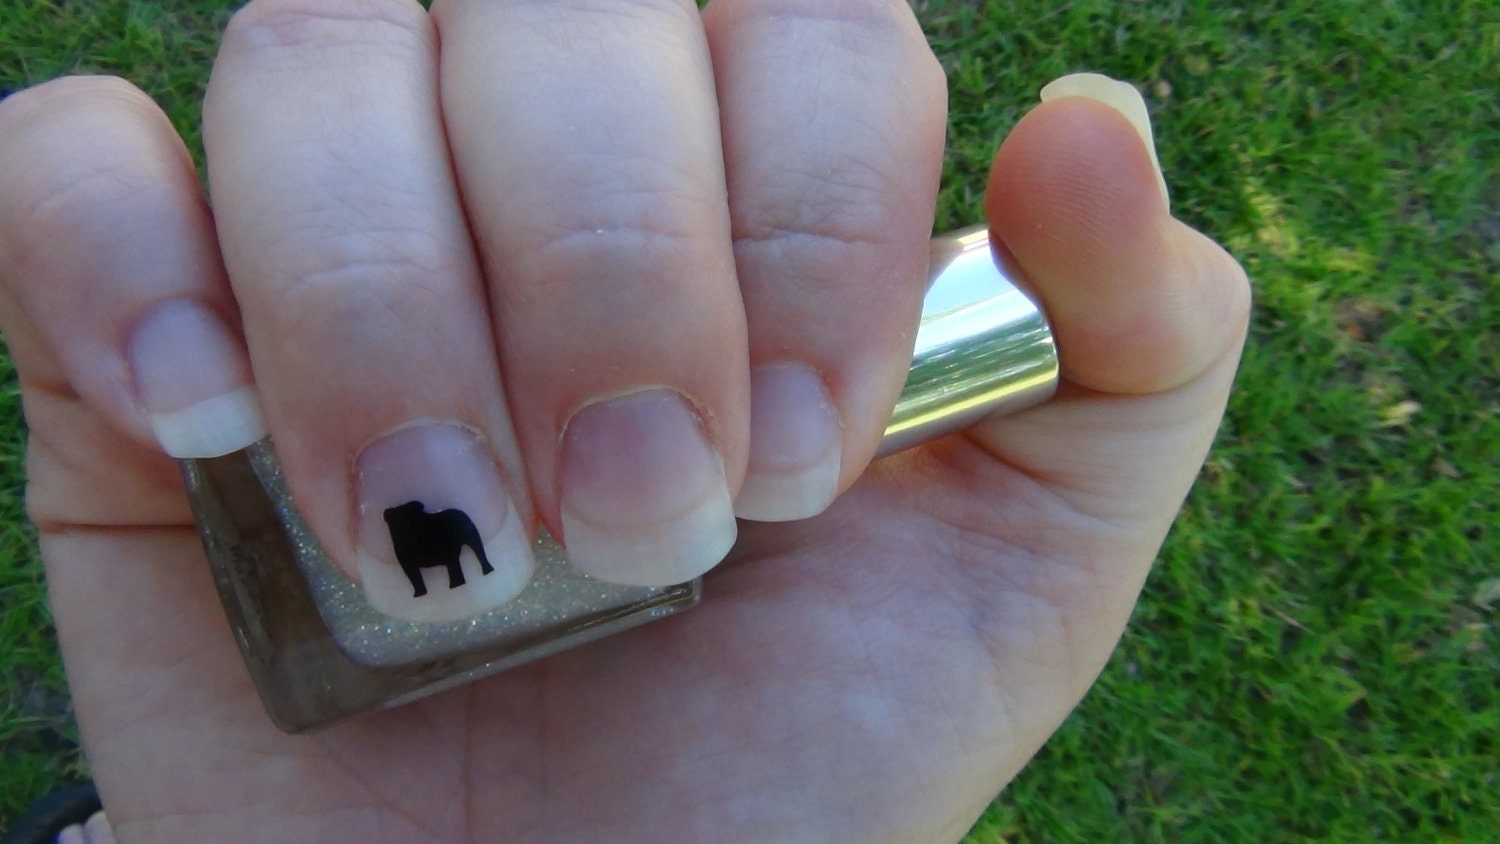 georgia bulldog nail design